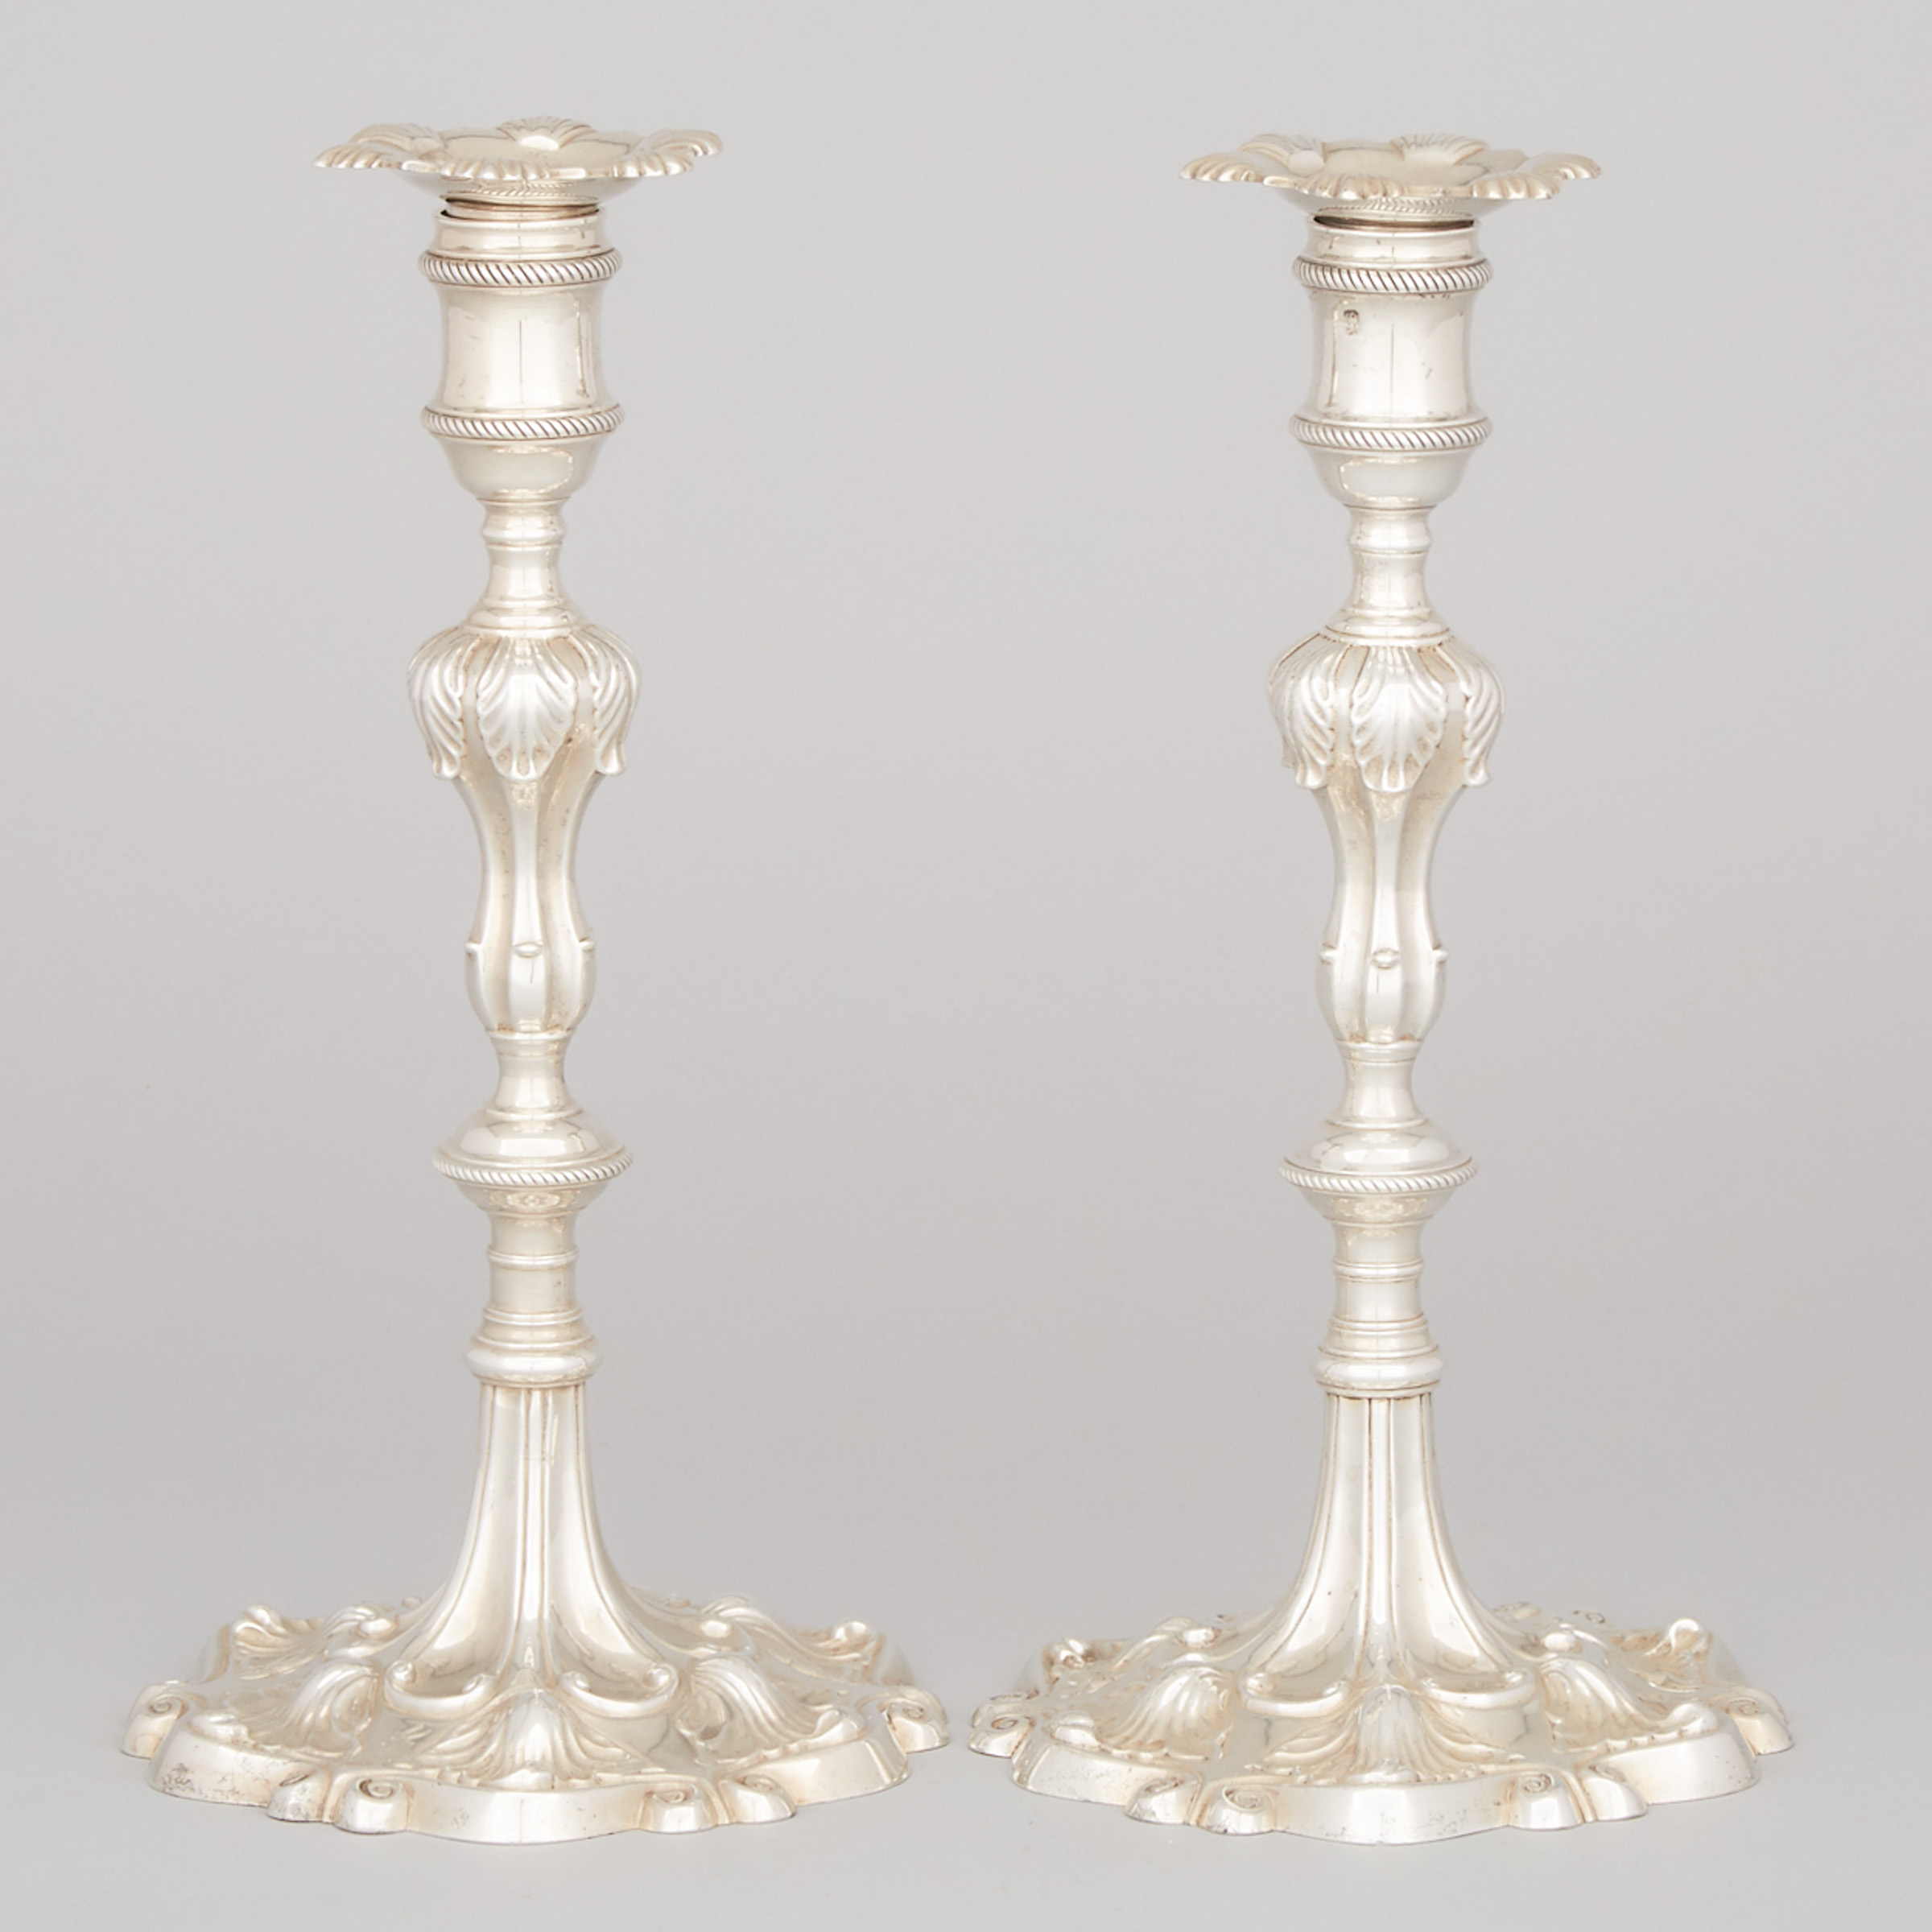 Pair of George III Silver Table Candlesticks, Ebenezer Coker, London, 1763